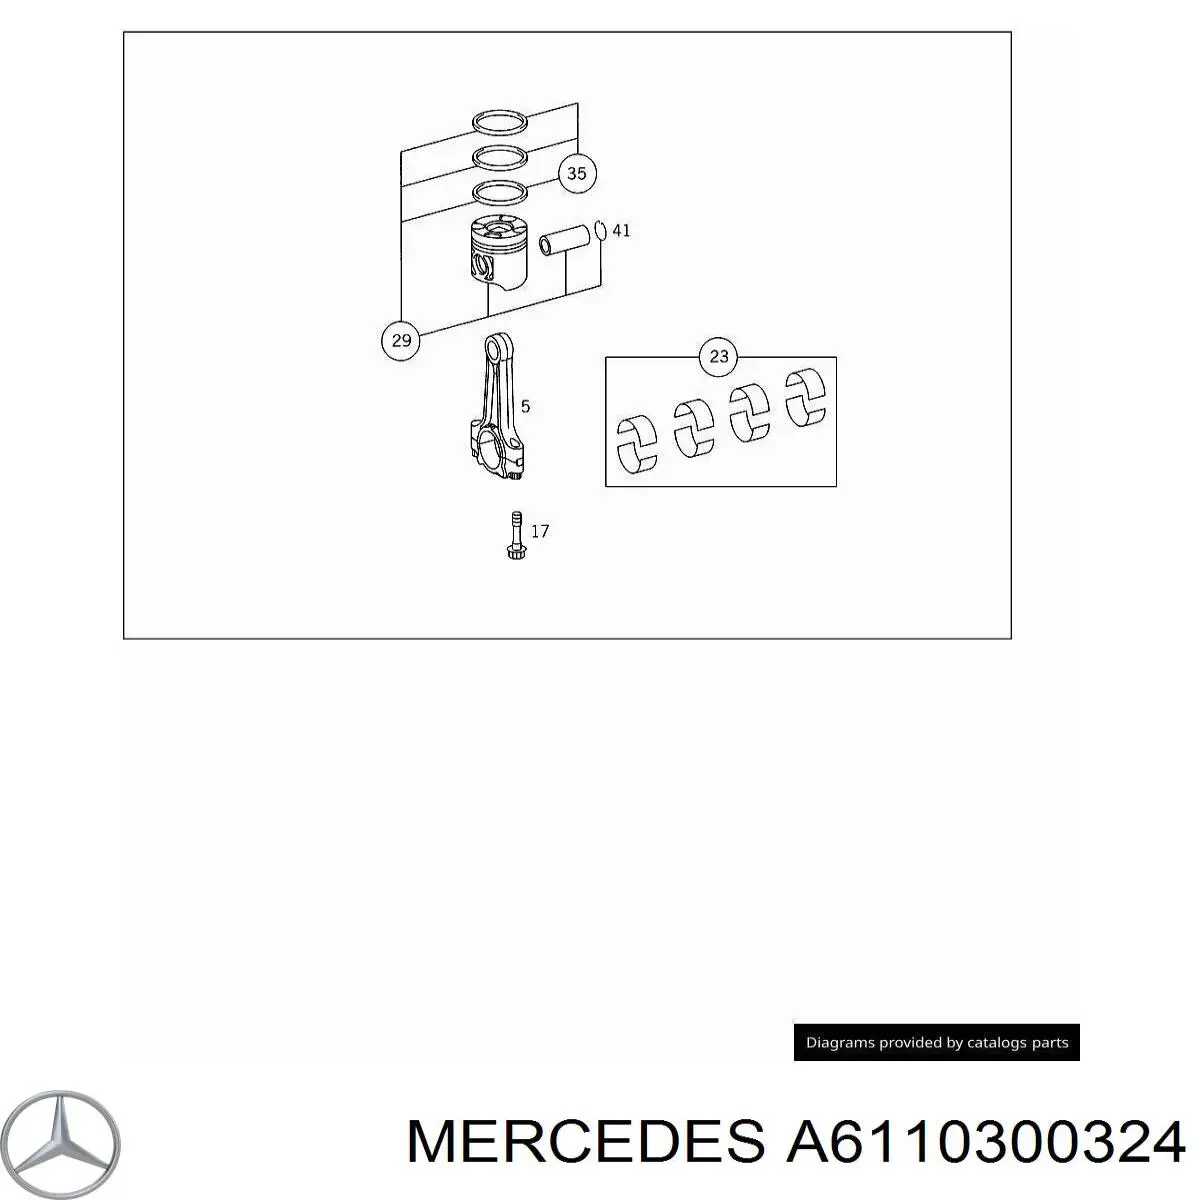 A6110300324 Mercedes кольца поршневые на 1 цилиндр, std.